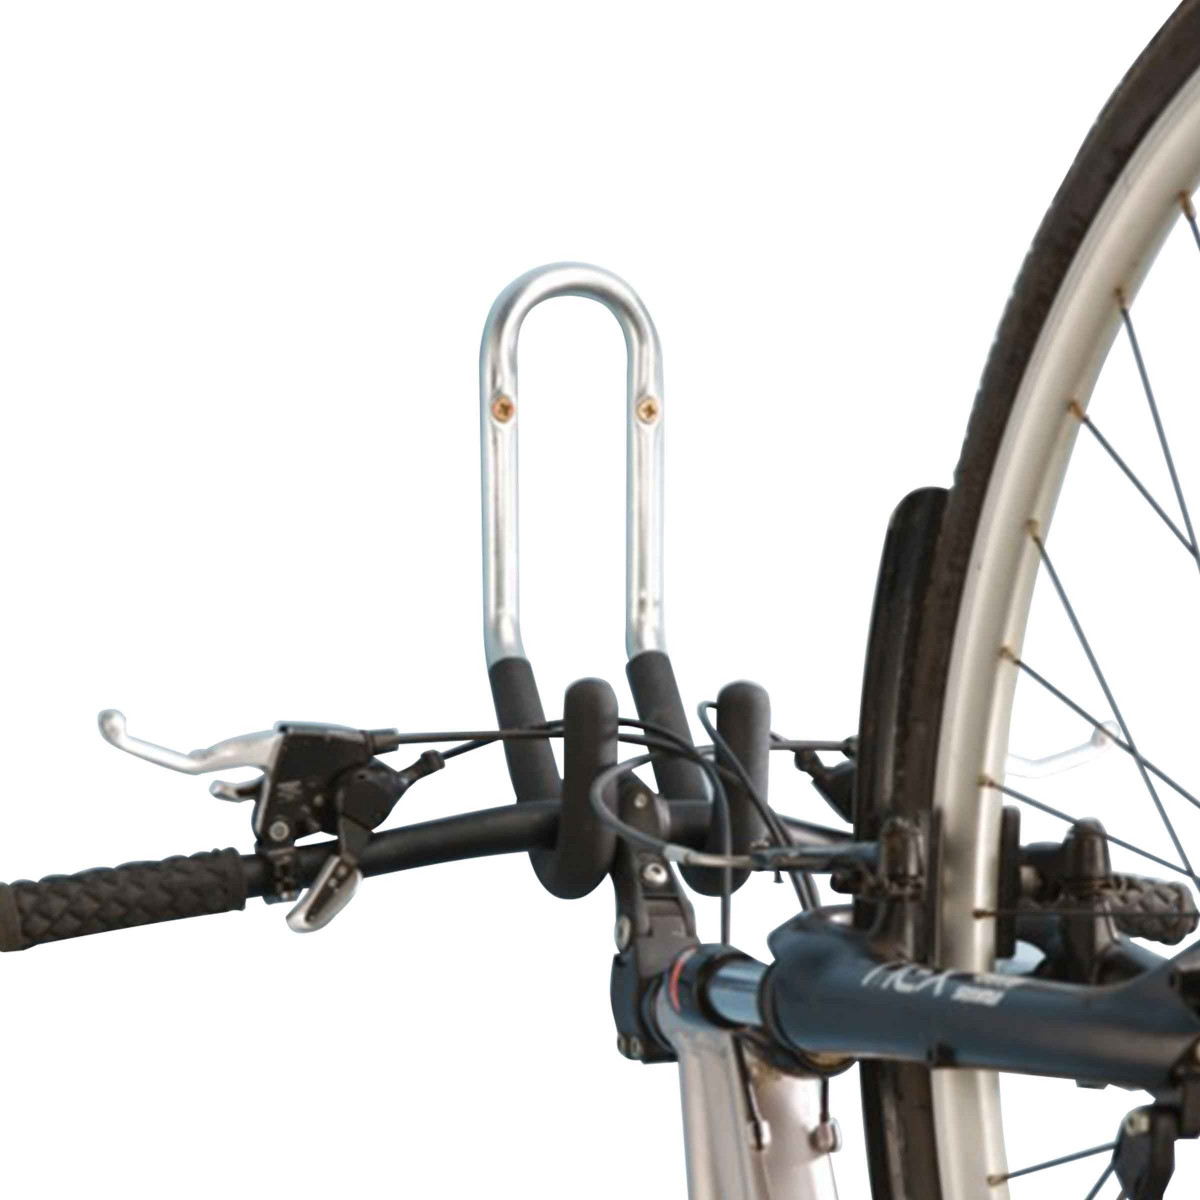 Mottez - Crochet vélo double - Support vélo Guidon